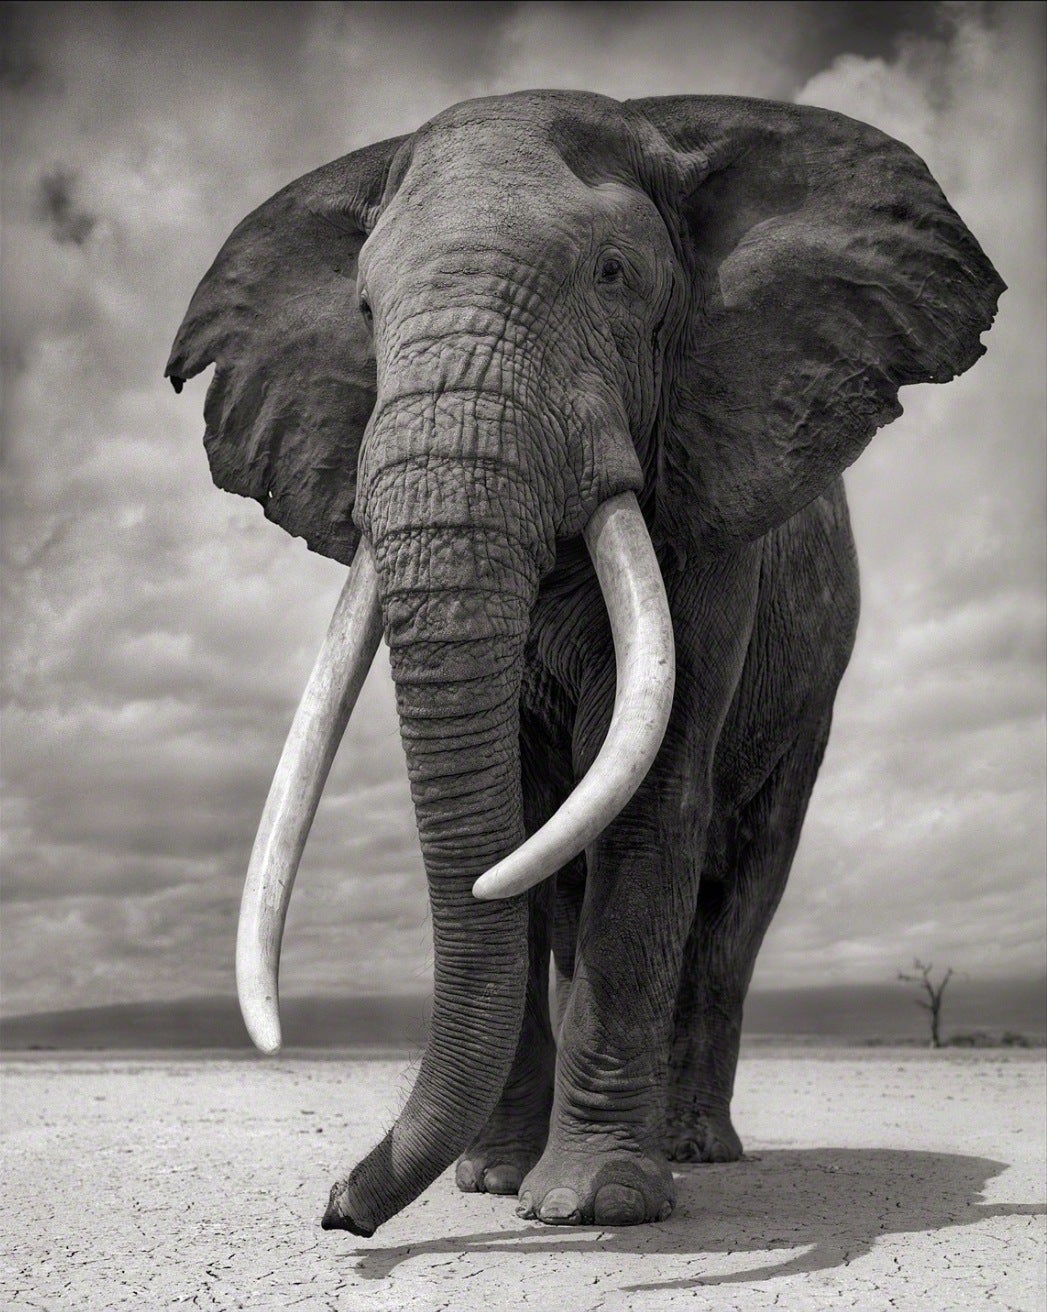 Elephant on Bare Earth, Amboseli